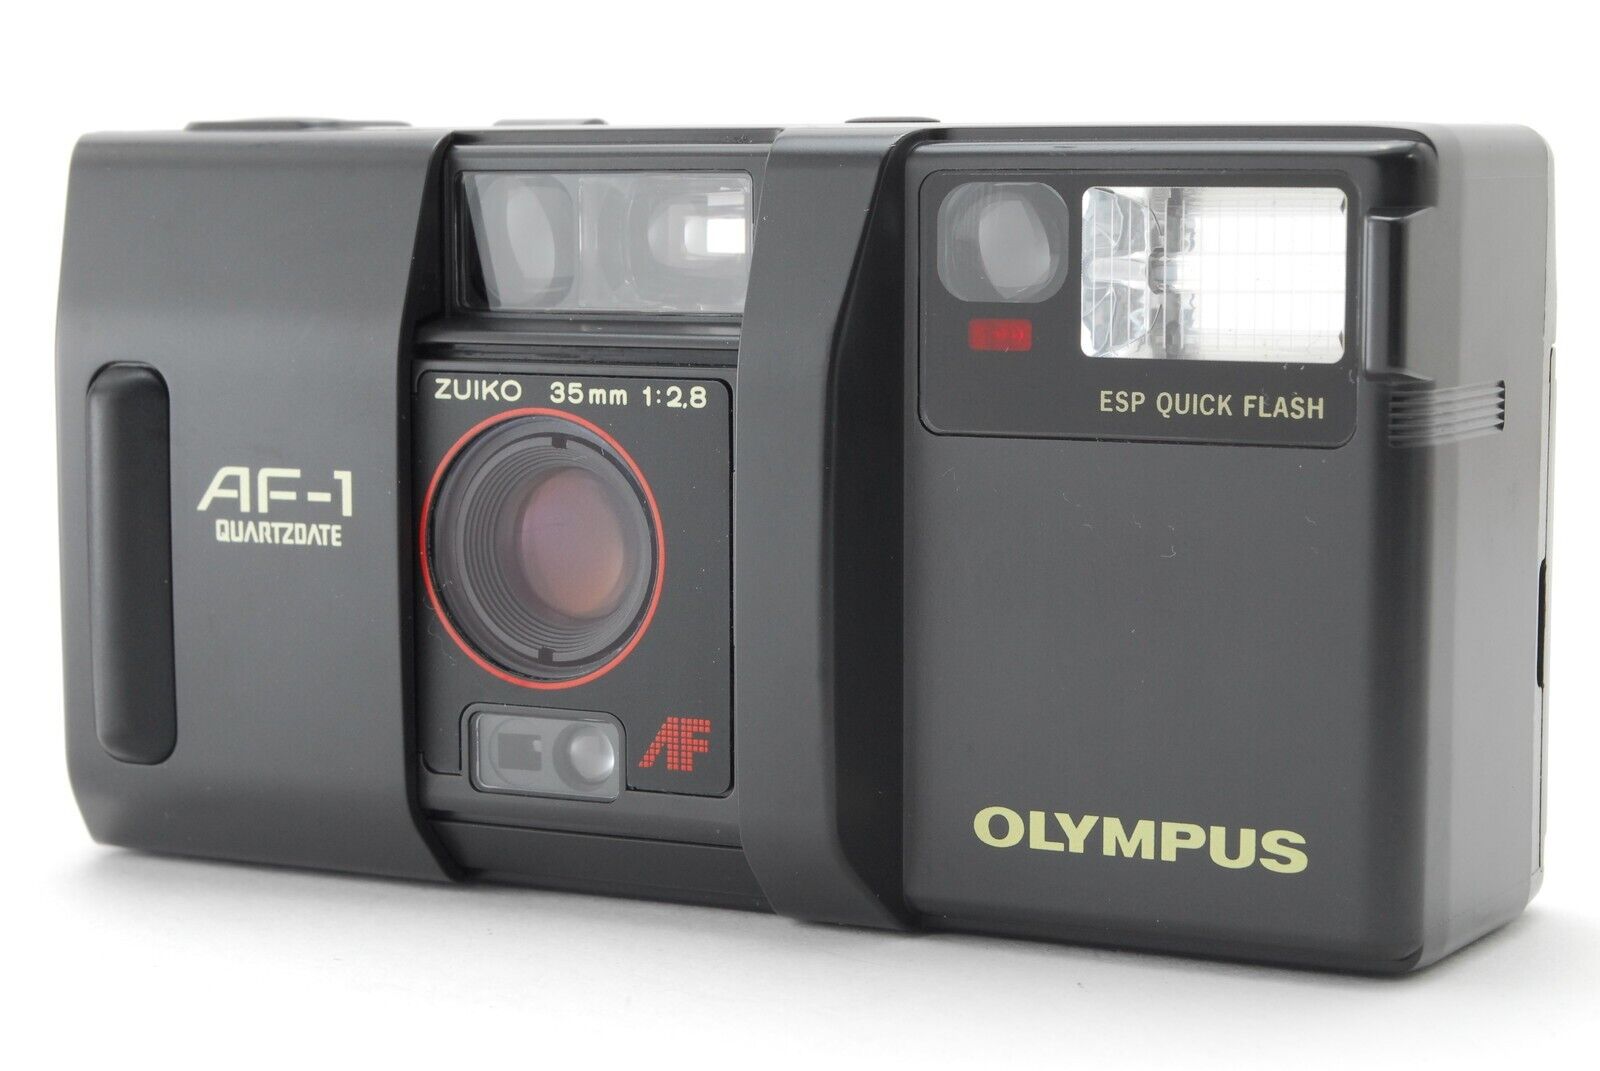 [NEAR MINT] Olympus AF-1 QD Point & Shoot Infinity 35mm Film Camera From JAPAN